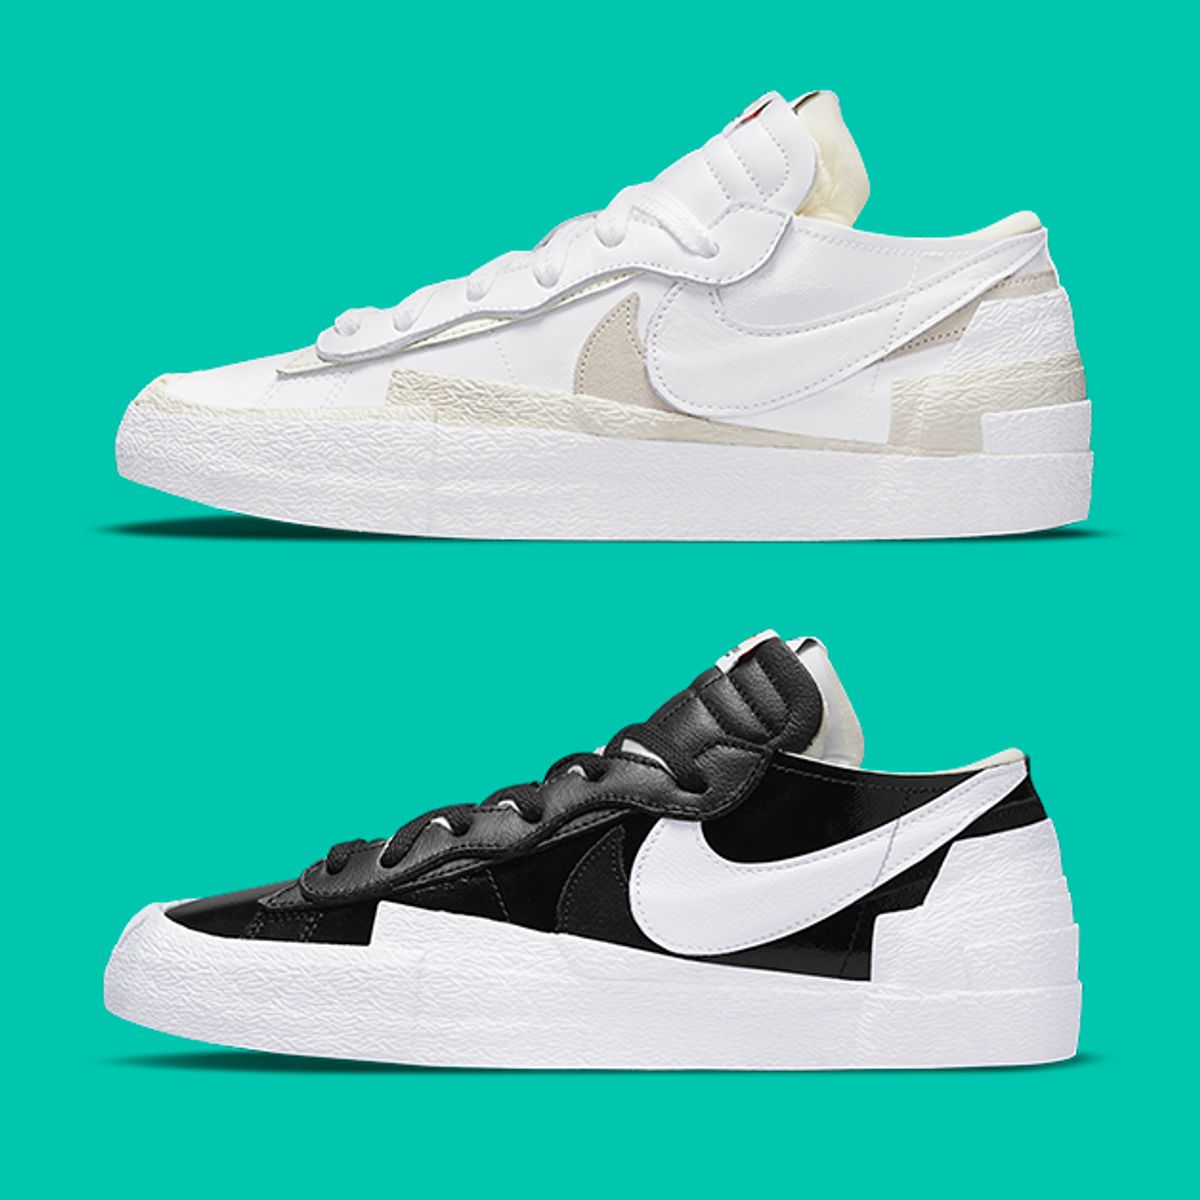 Where to the sacai Nike Blazer Low 'Black' and 'White' Leather - Freaker